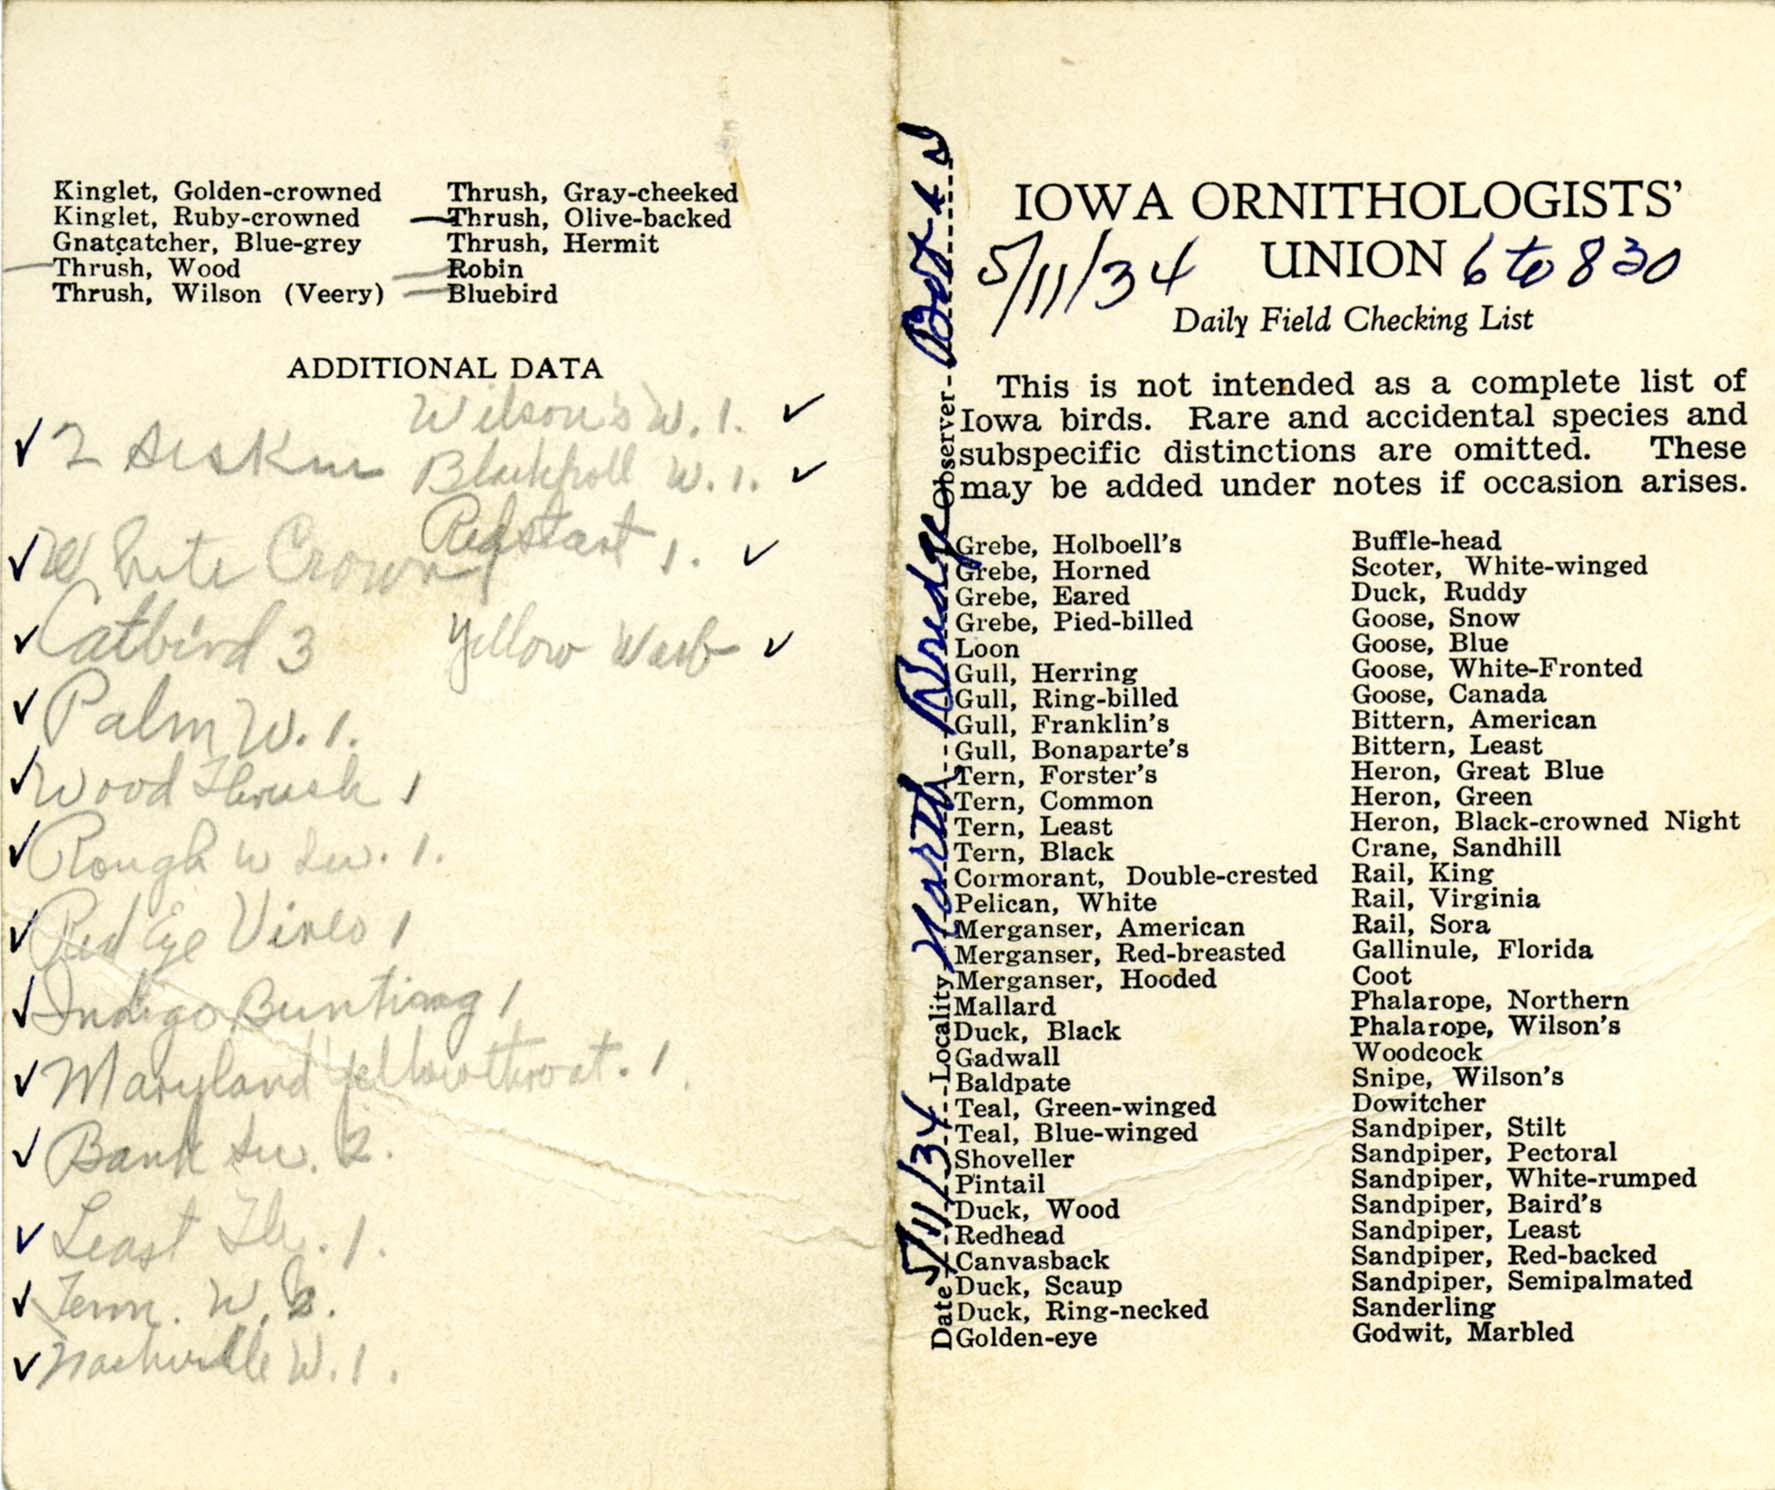 Daily field checking list, Walter Rosene, May 11, 1934